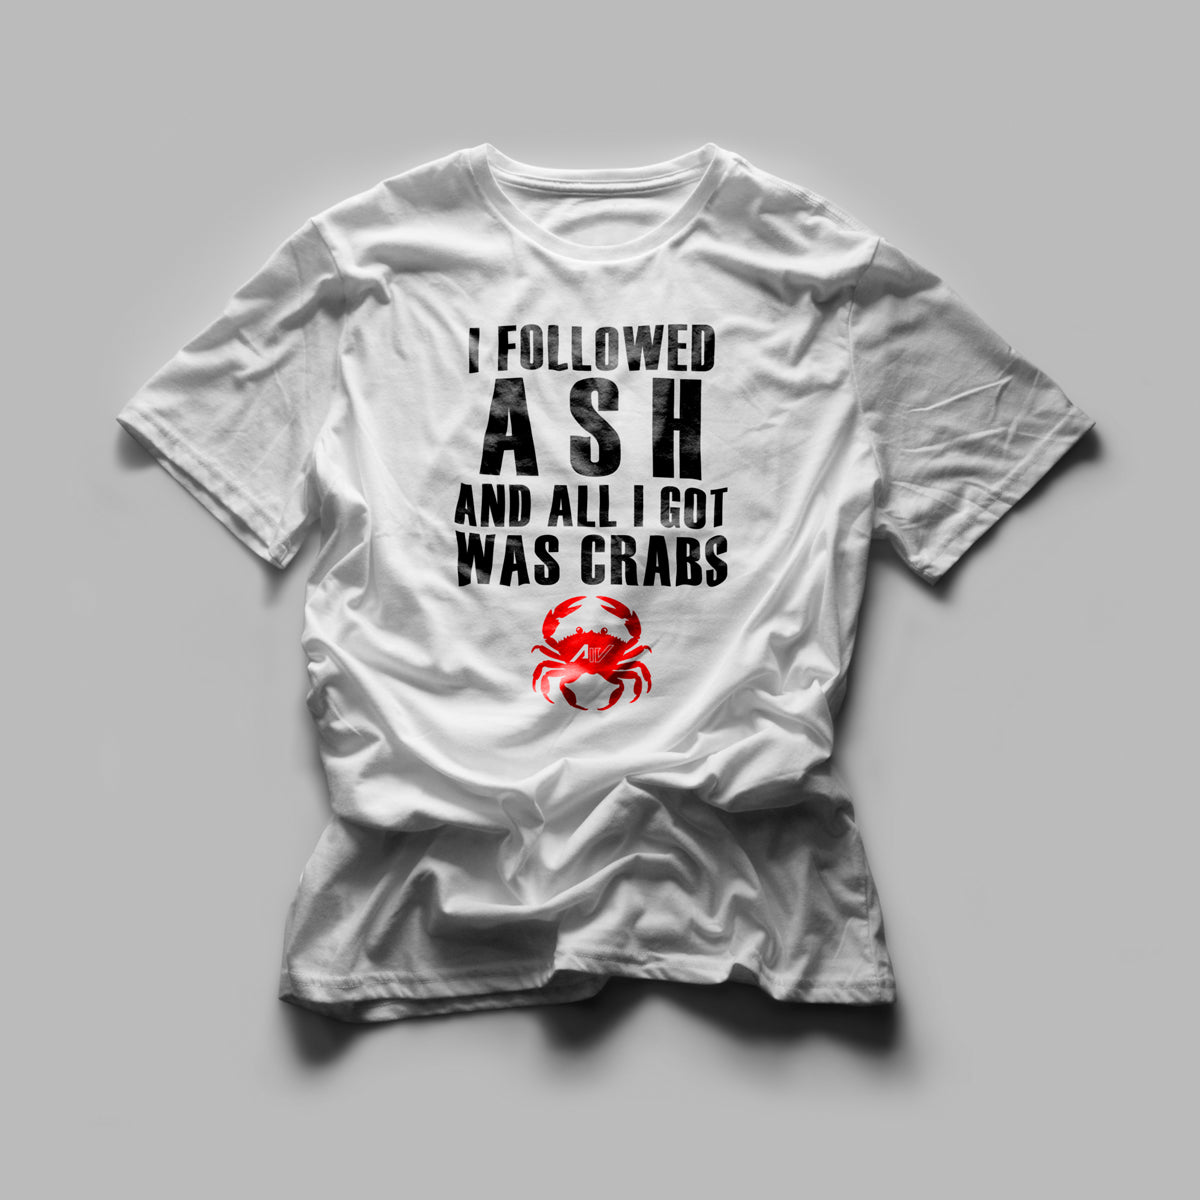 AshIV_ - I Got Crabs Tee